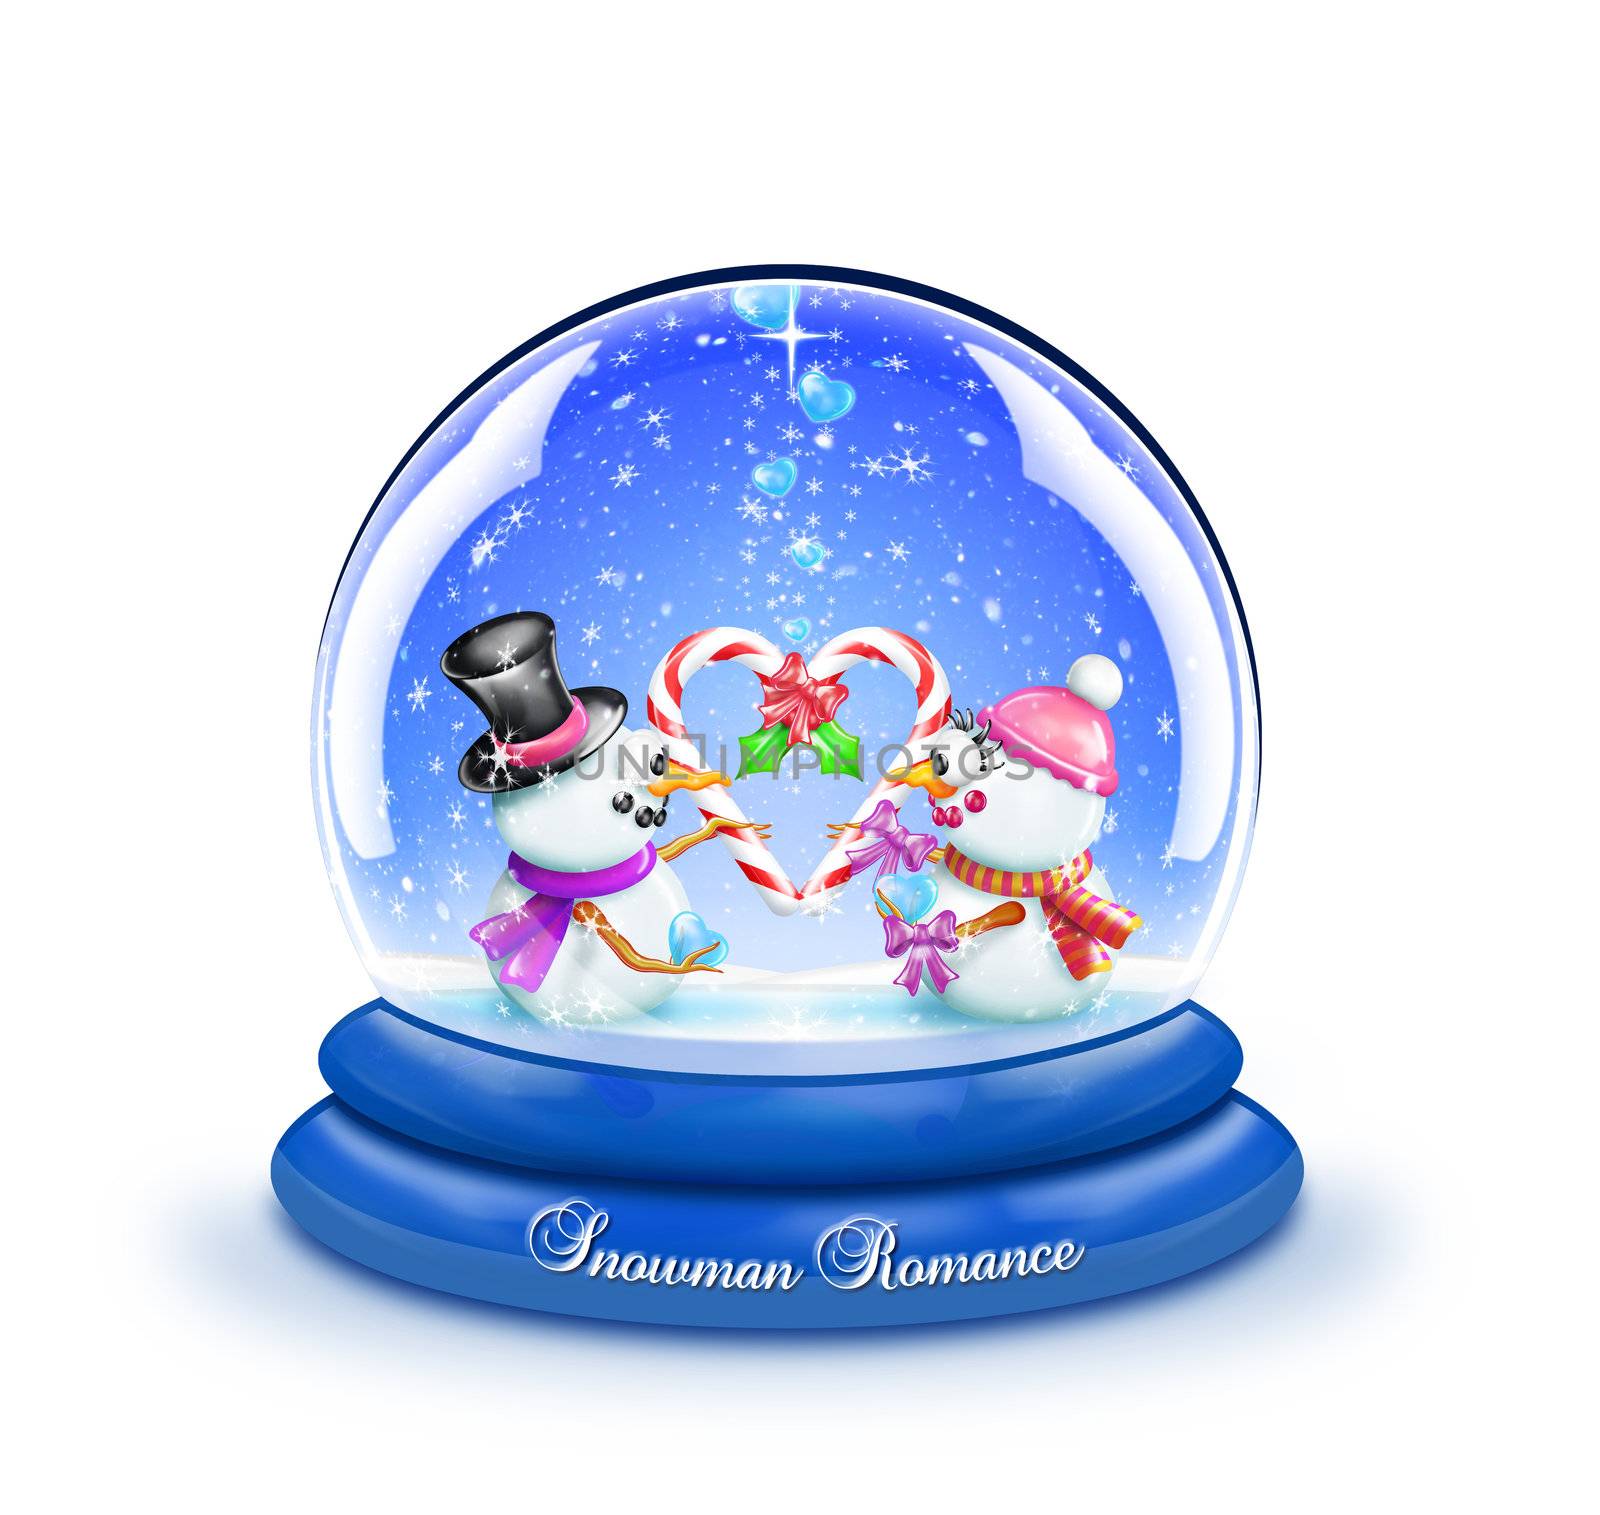 Snowman Candy Cane Romance Snow Globe by komodoempire